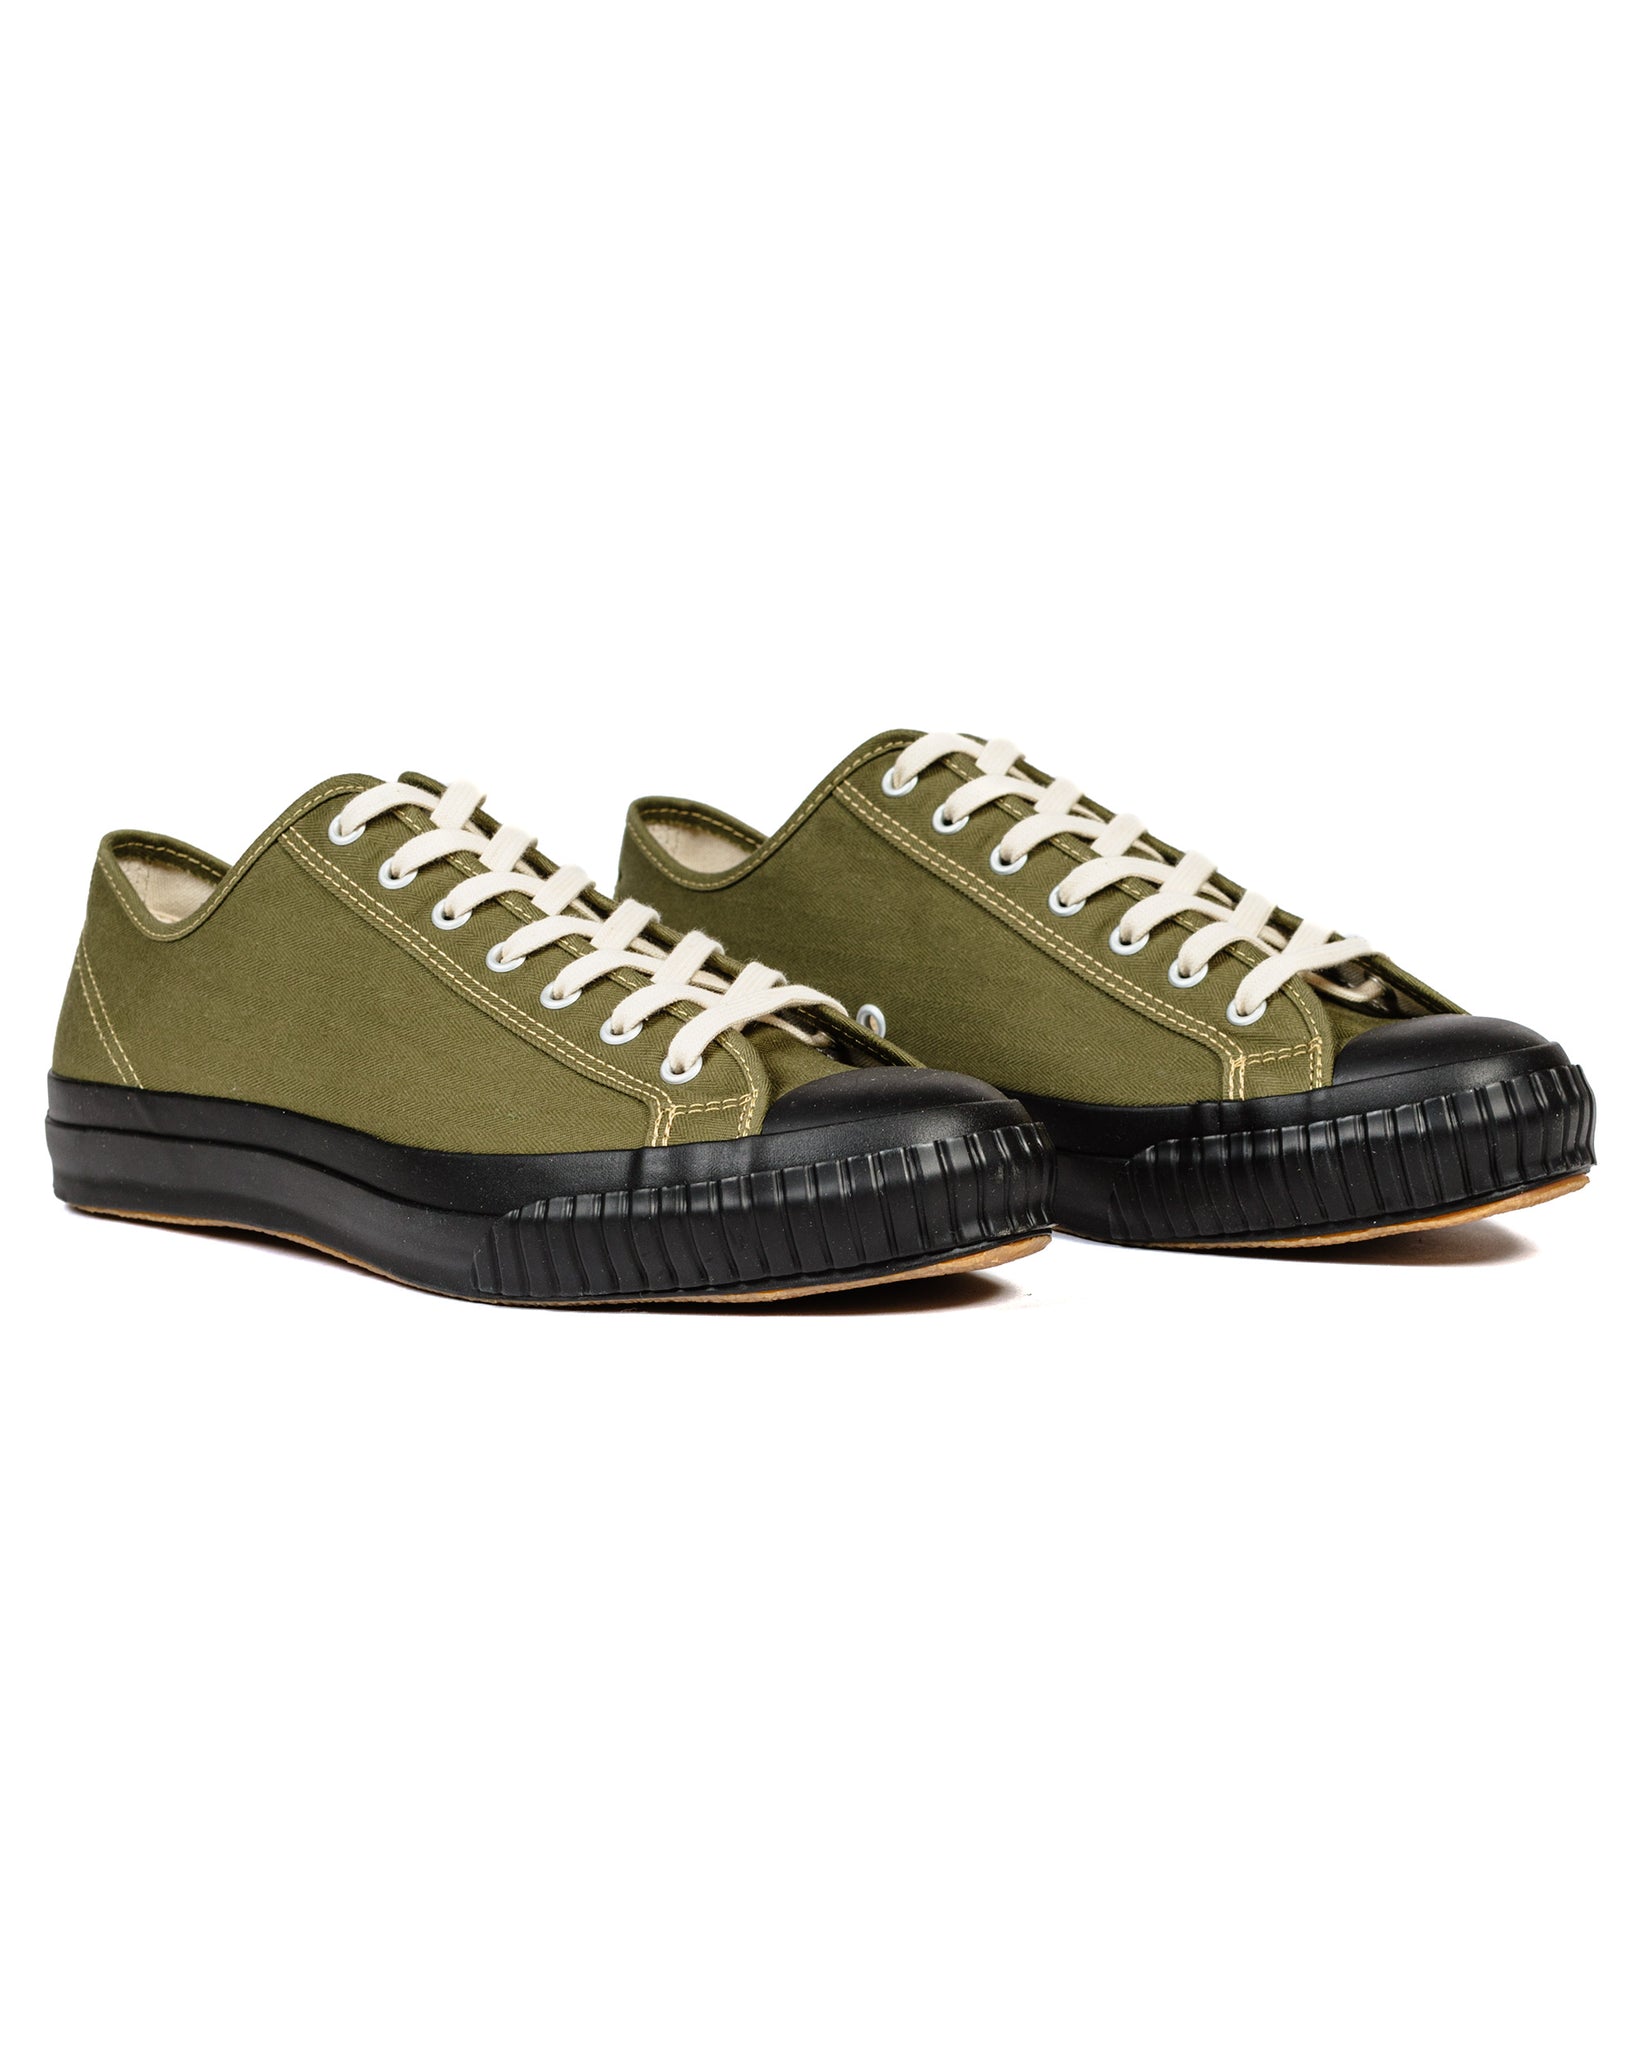 John Lofgren Bootmaker JLB Champion Sneakers WWII Style US Army Olive Drab Side